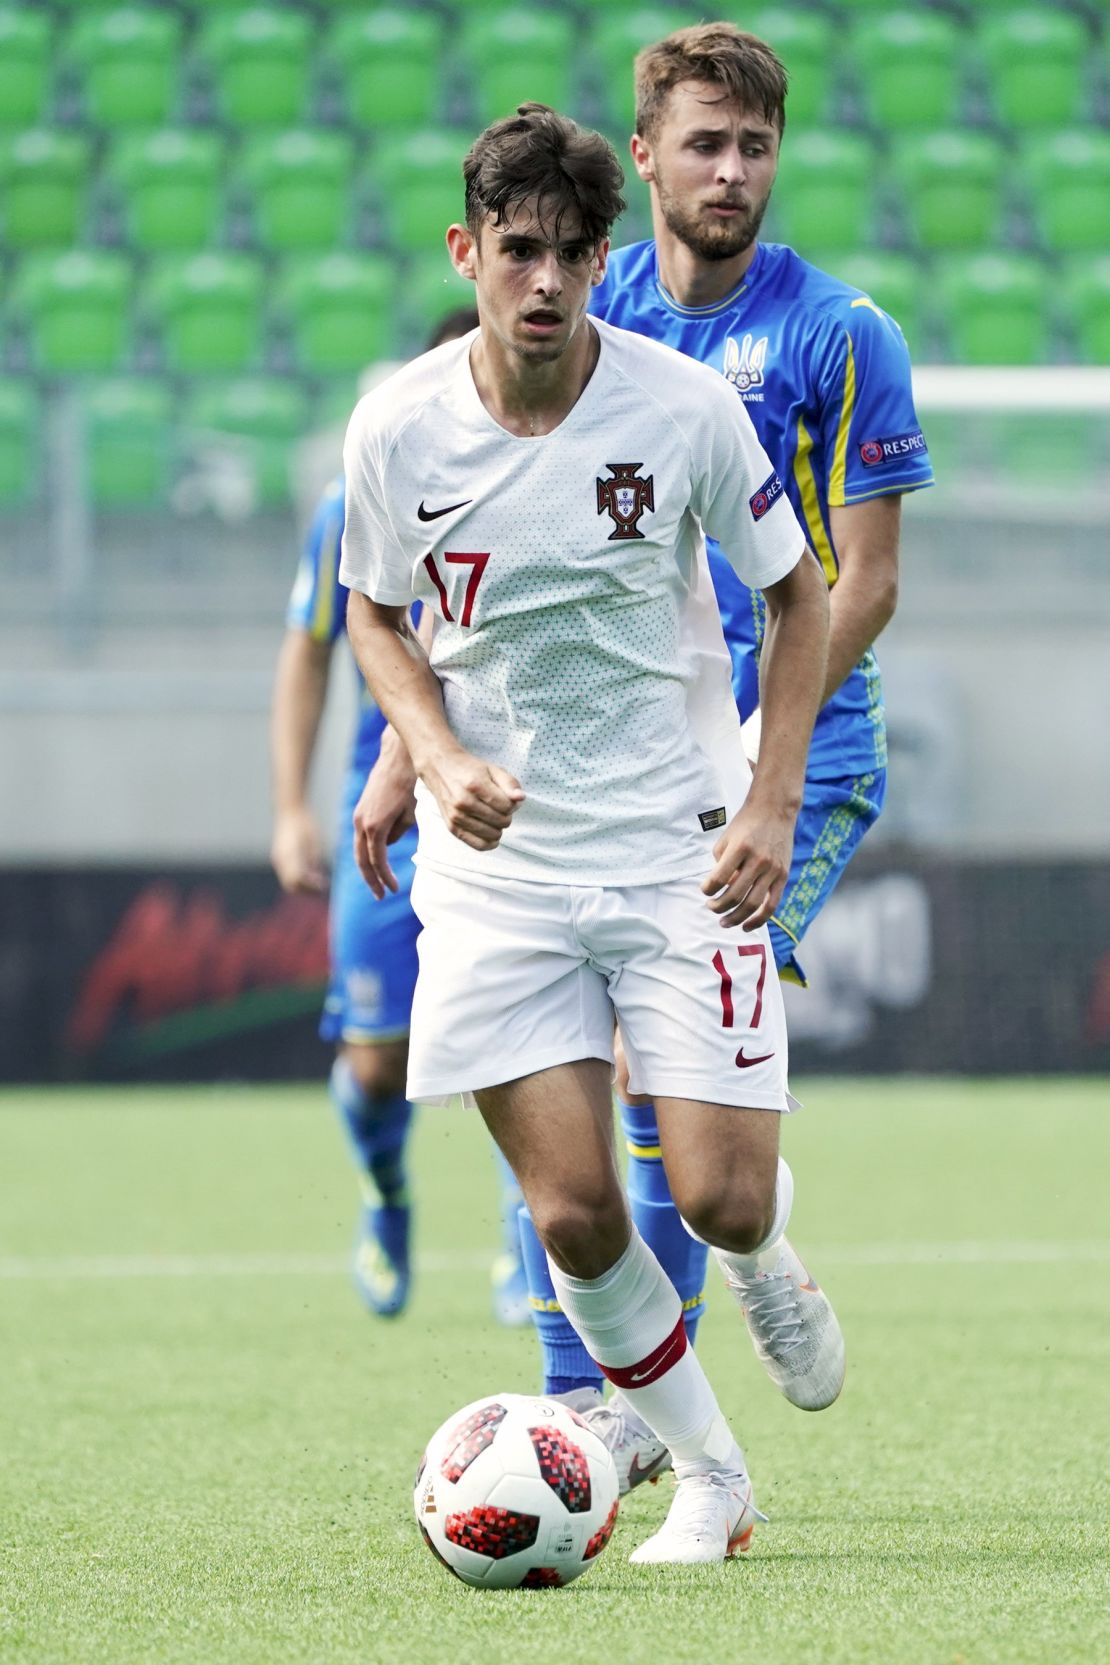 Francisco Trincao during the 2018 European Under-19 Championship semifinal against Ukraine.